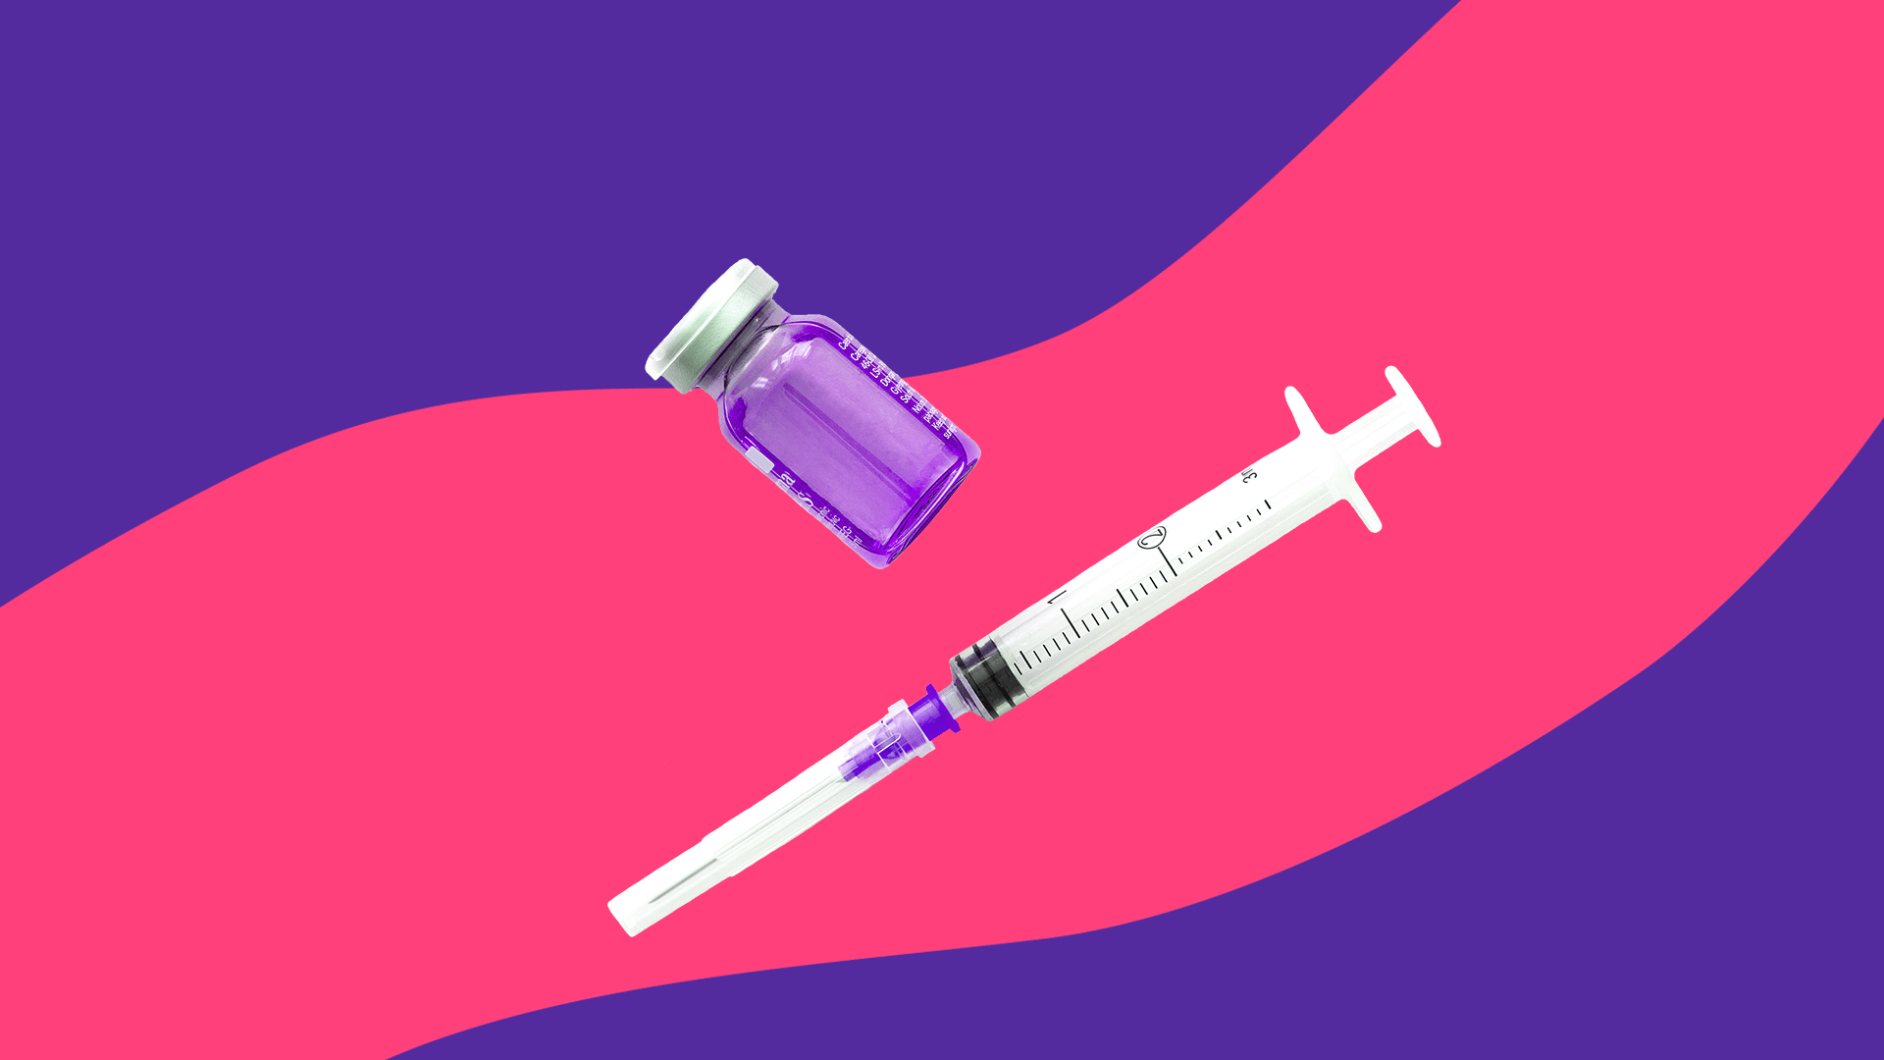 Rx vial and hypodermic needle: Lidocaine (Xylocaine) alternatives: